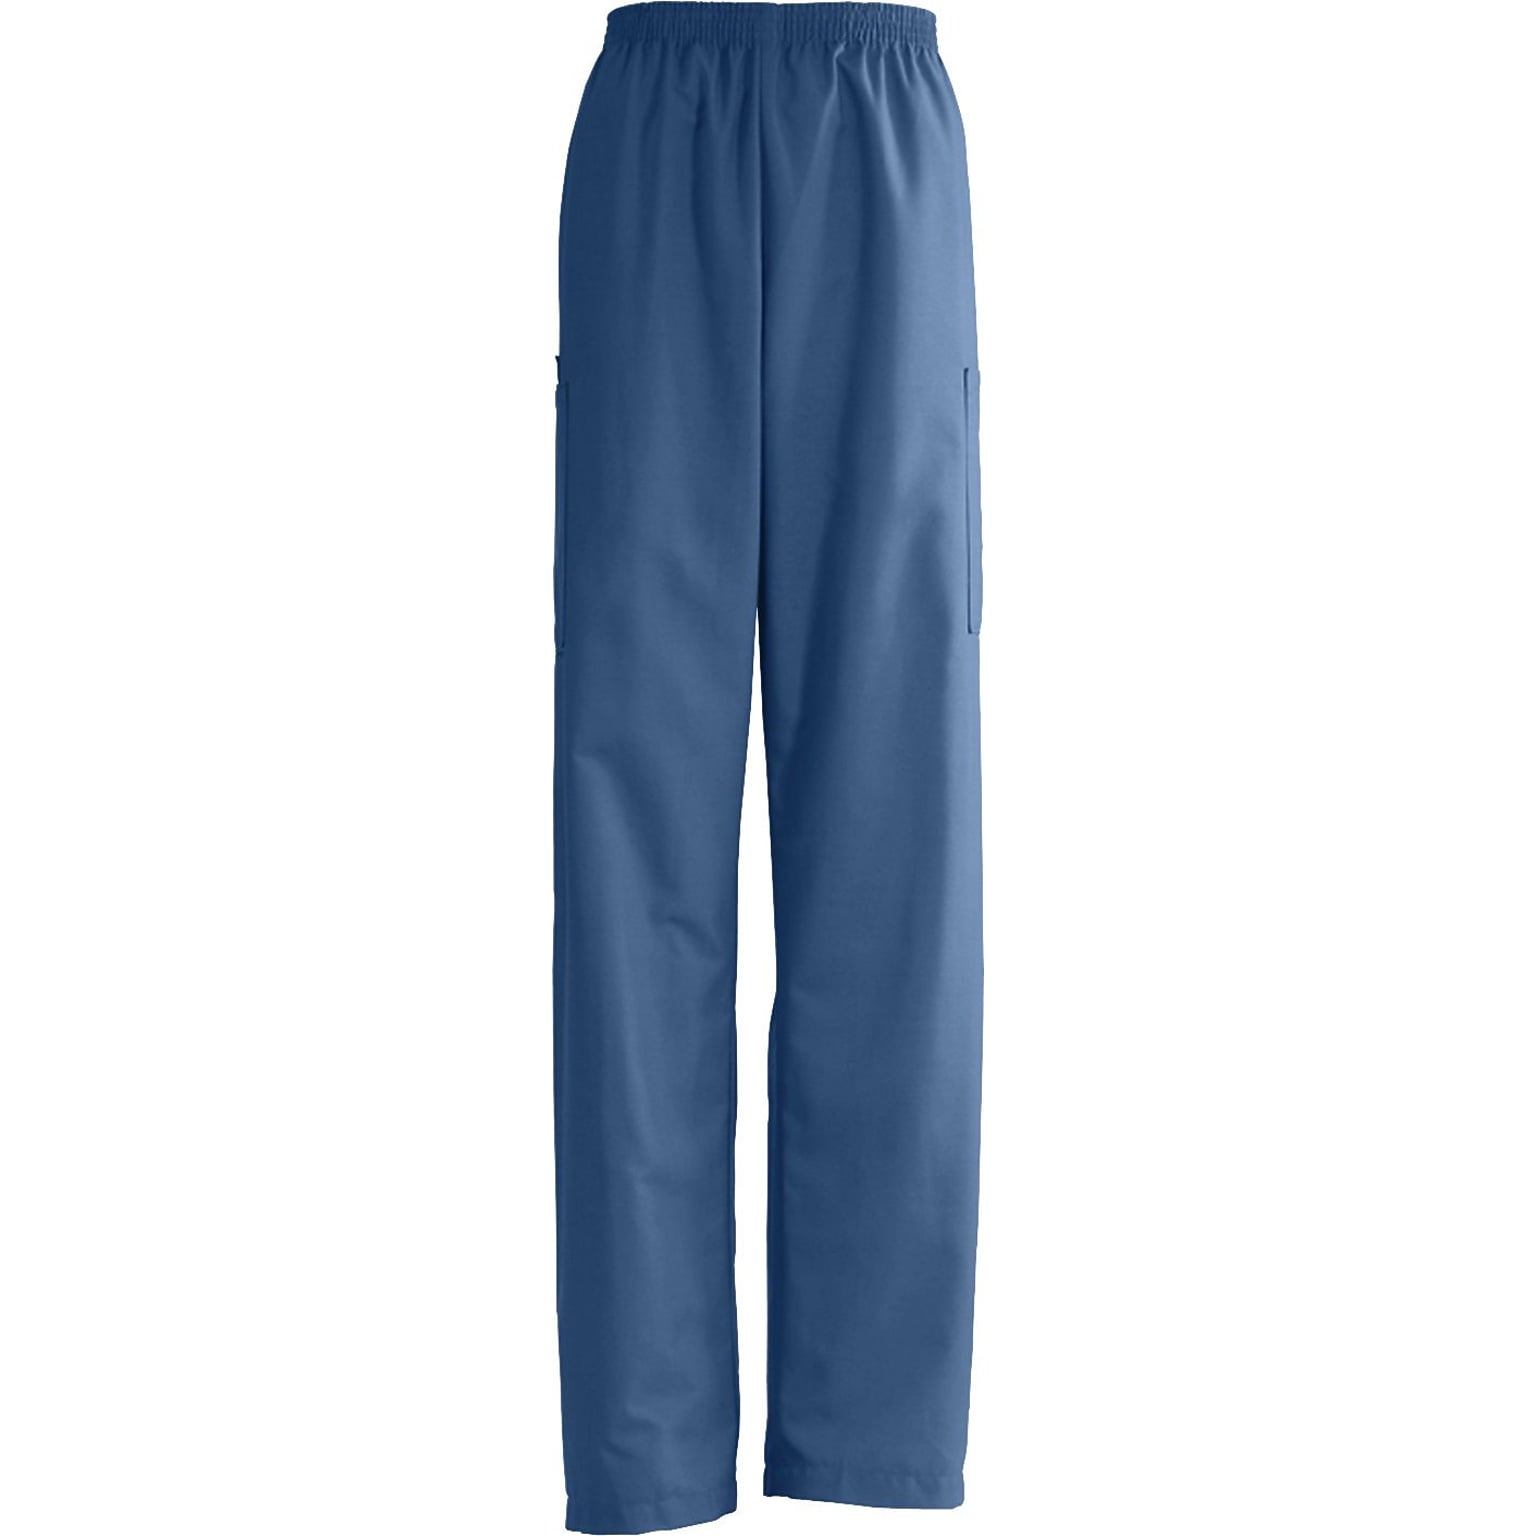 AngelStat® Unisex Elastic Cargo Scrub Pants, Navy Blue, Large, Medium Length